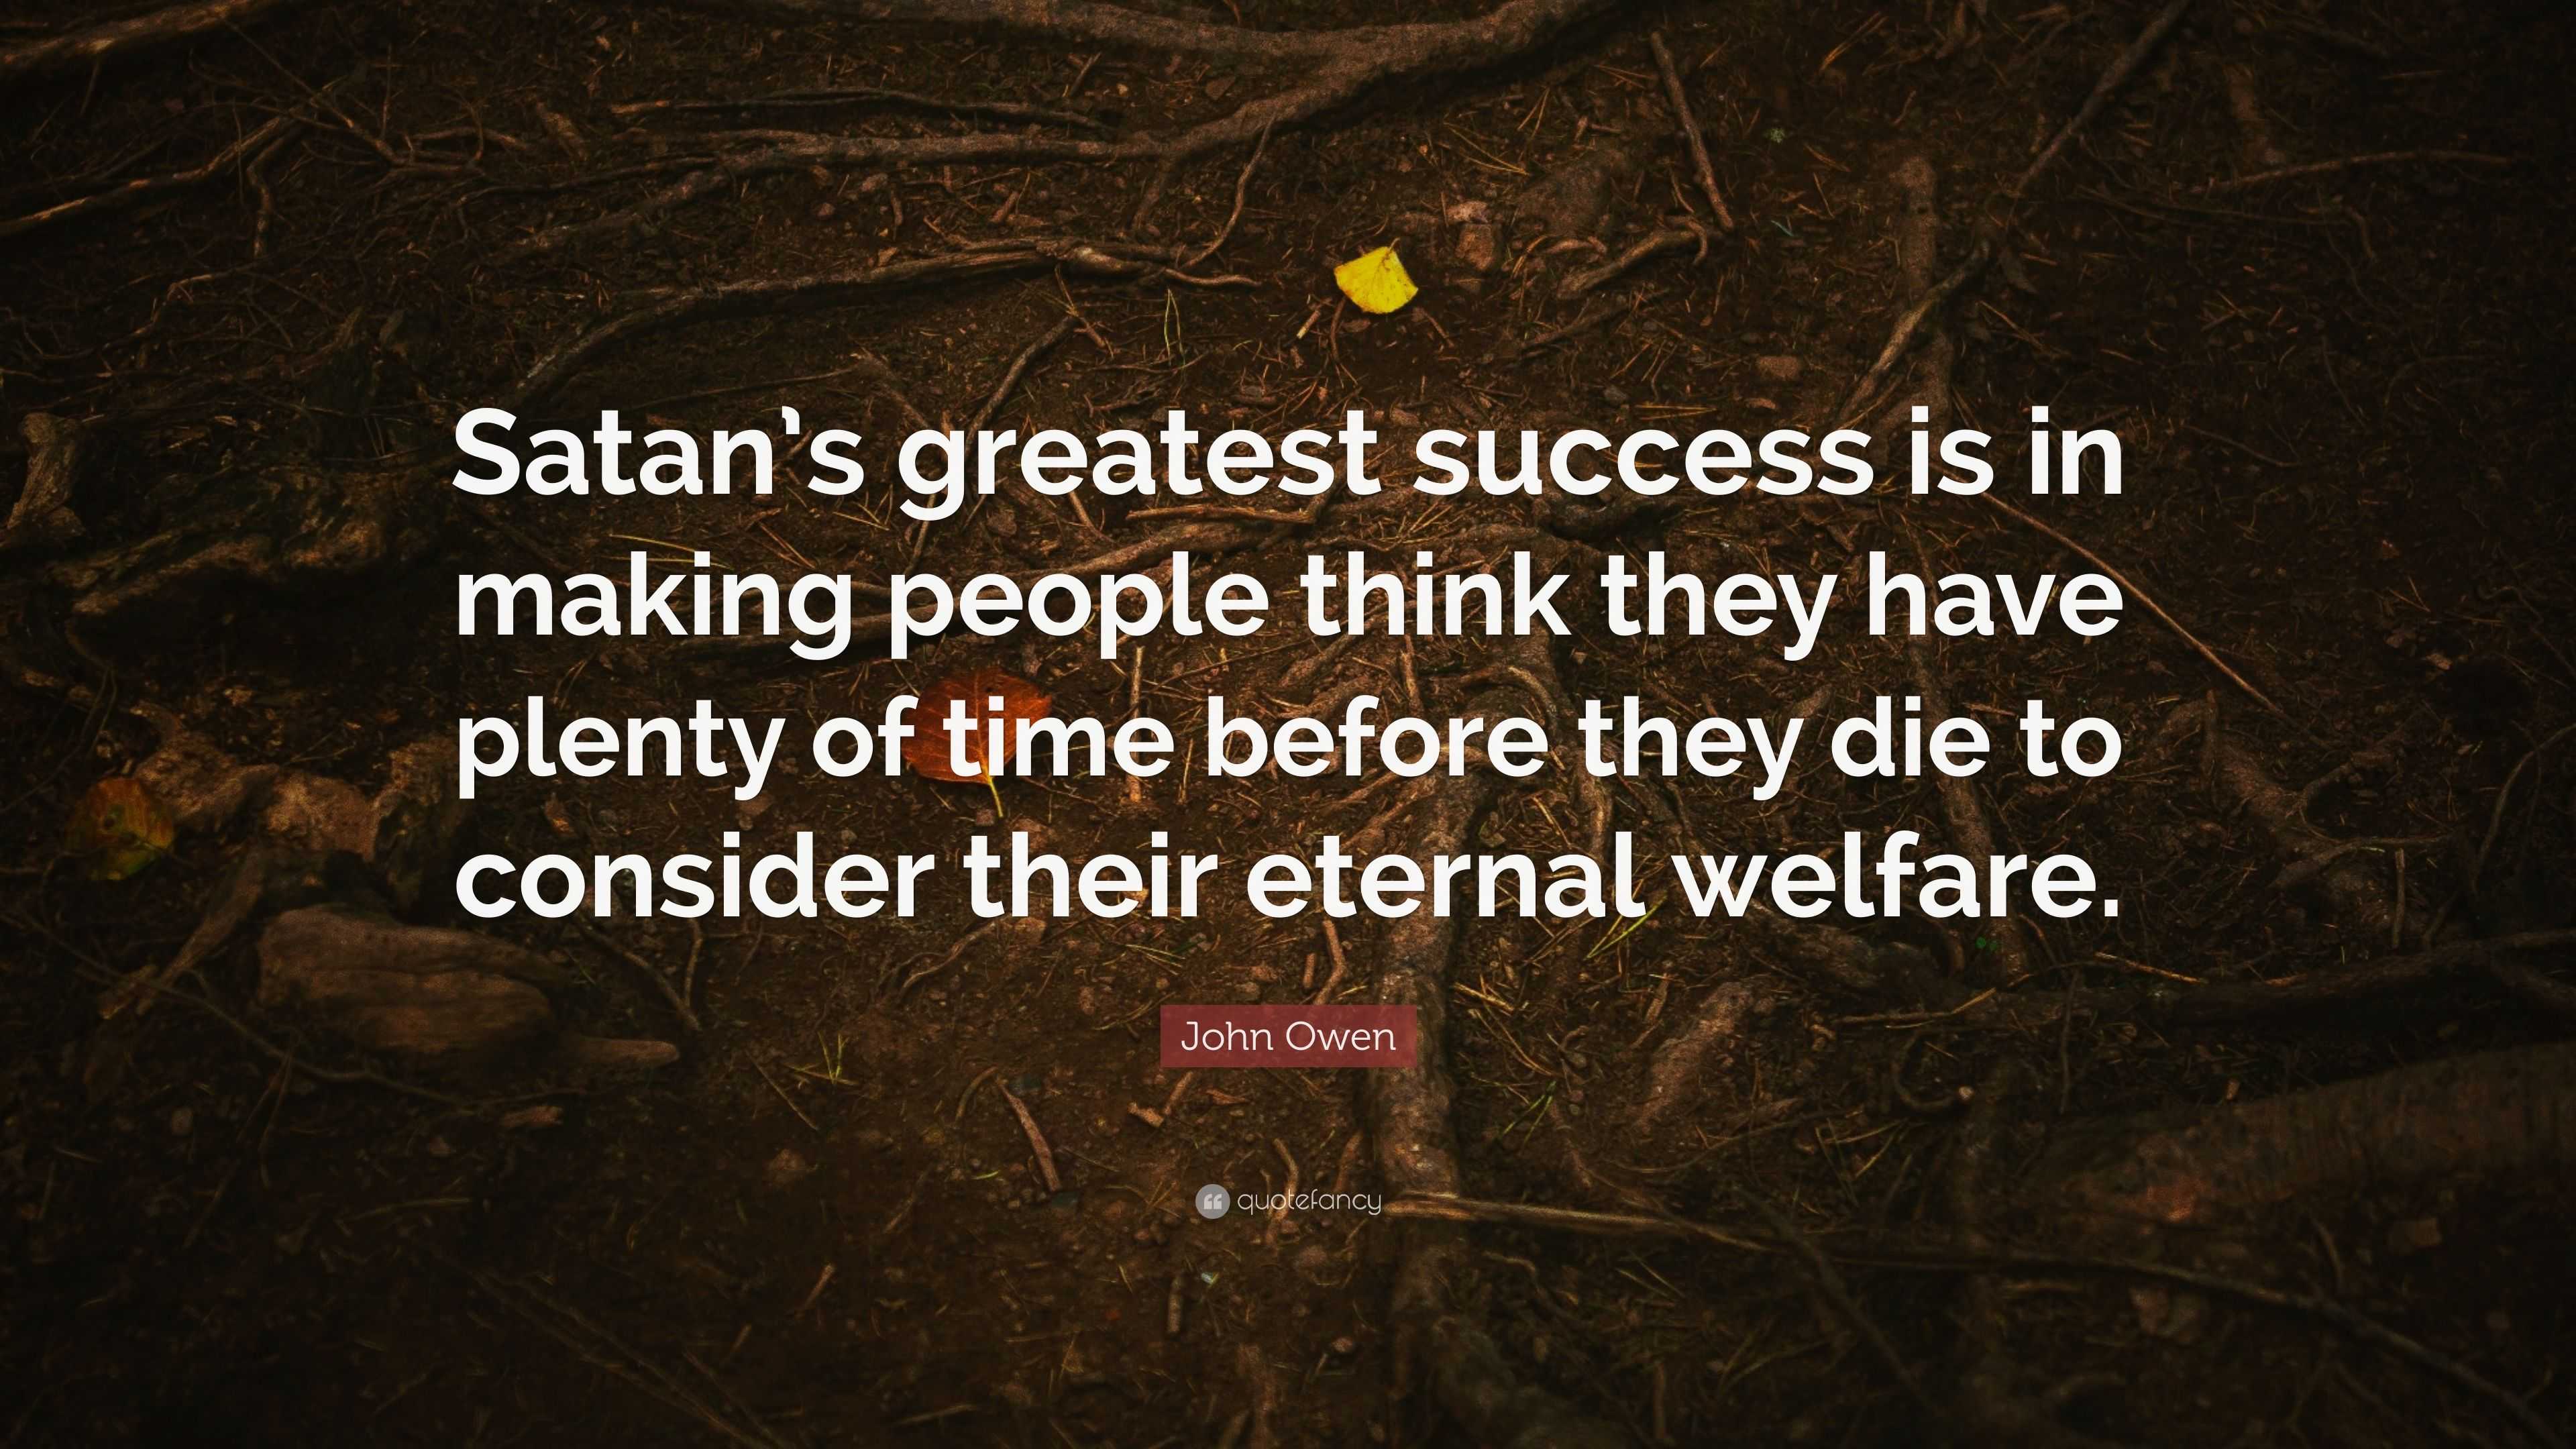 John Owen Quote: “Satan's greatest success is in making people